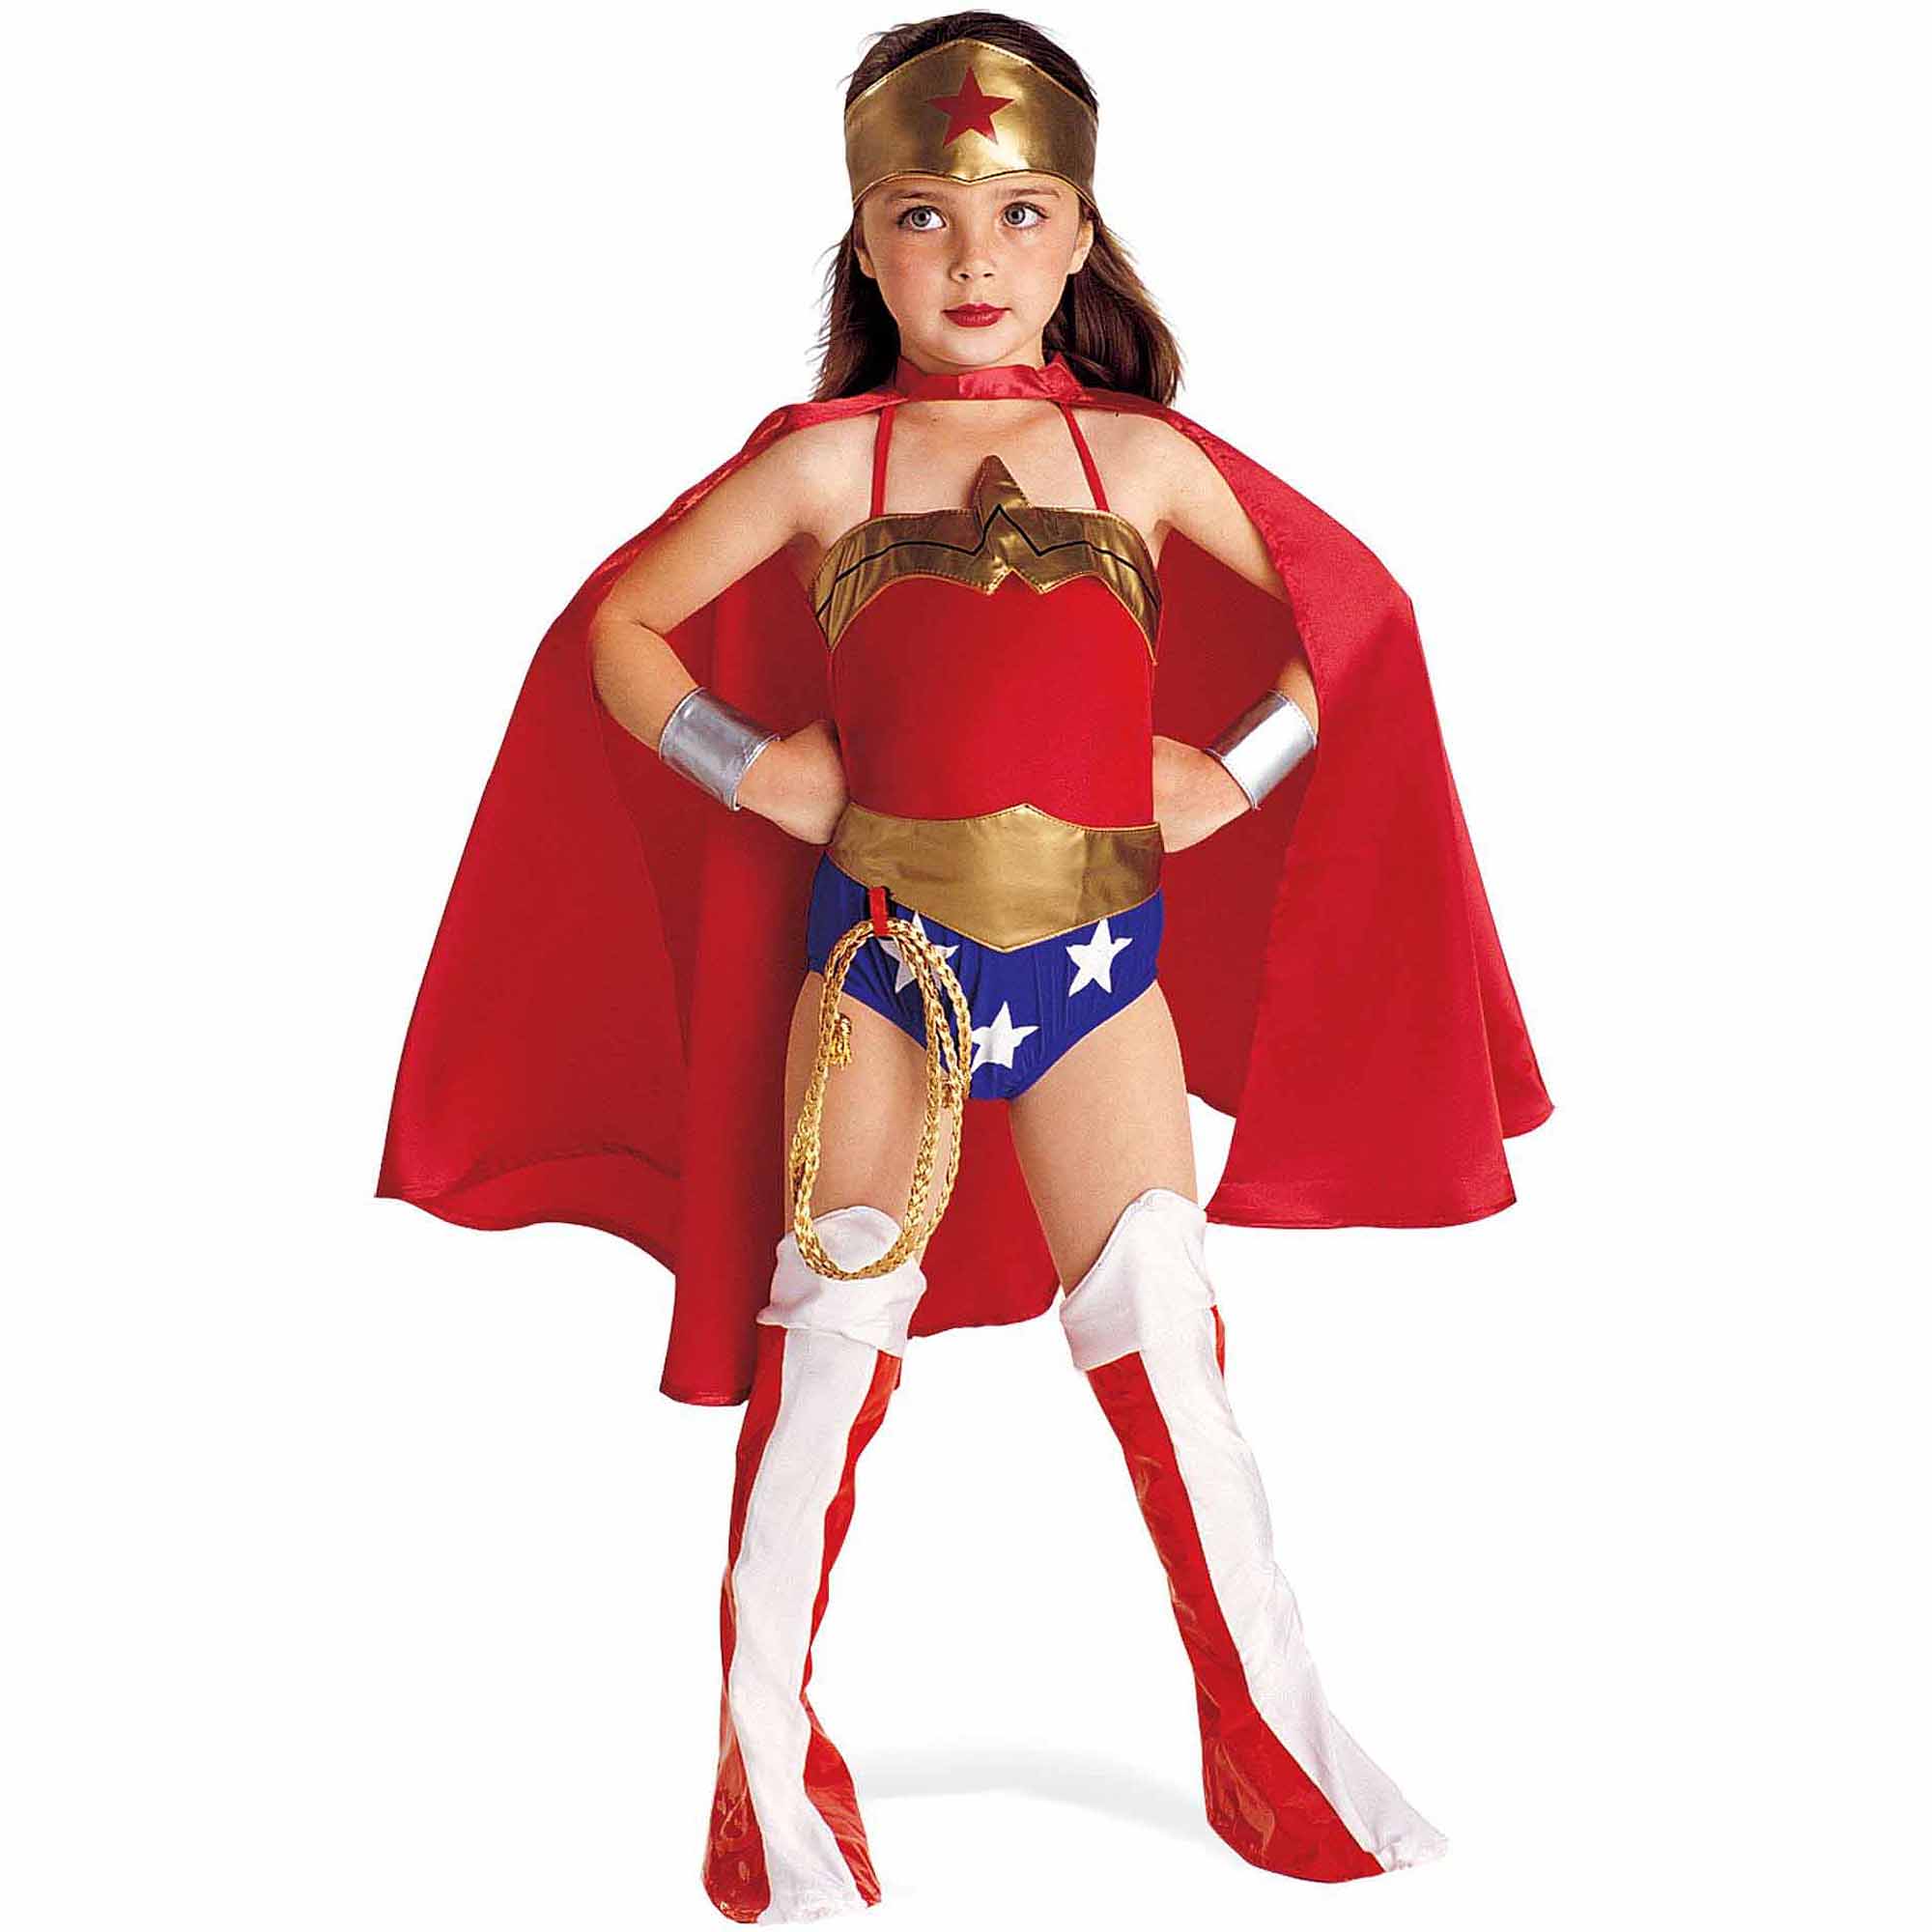 Justice League DC Comics Wonder Woman Child Halloween Costume - image 1 of 4